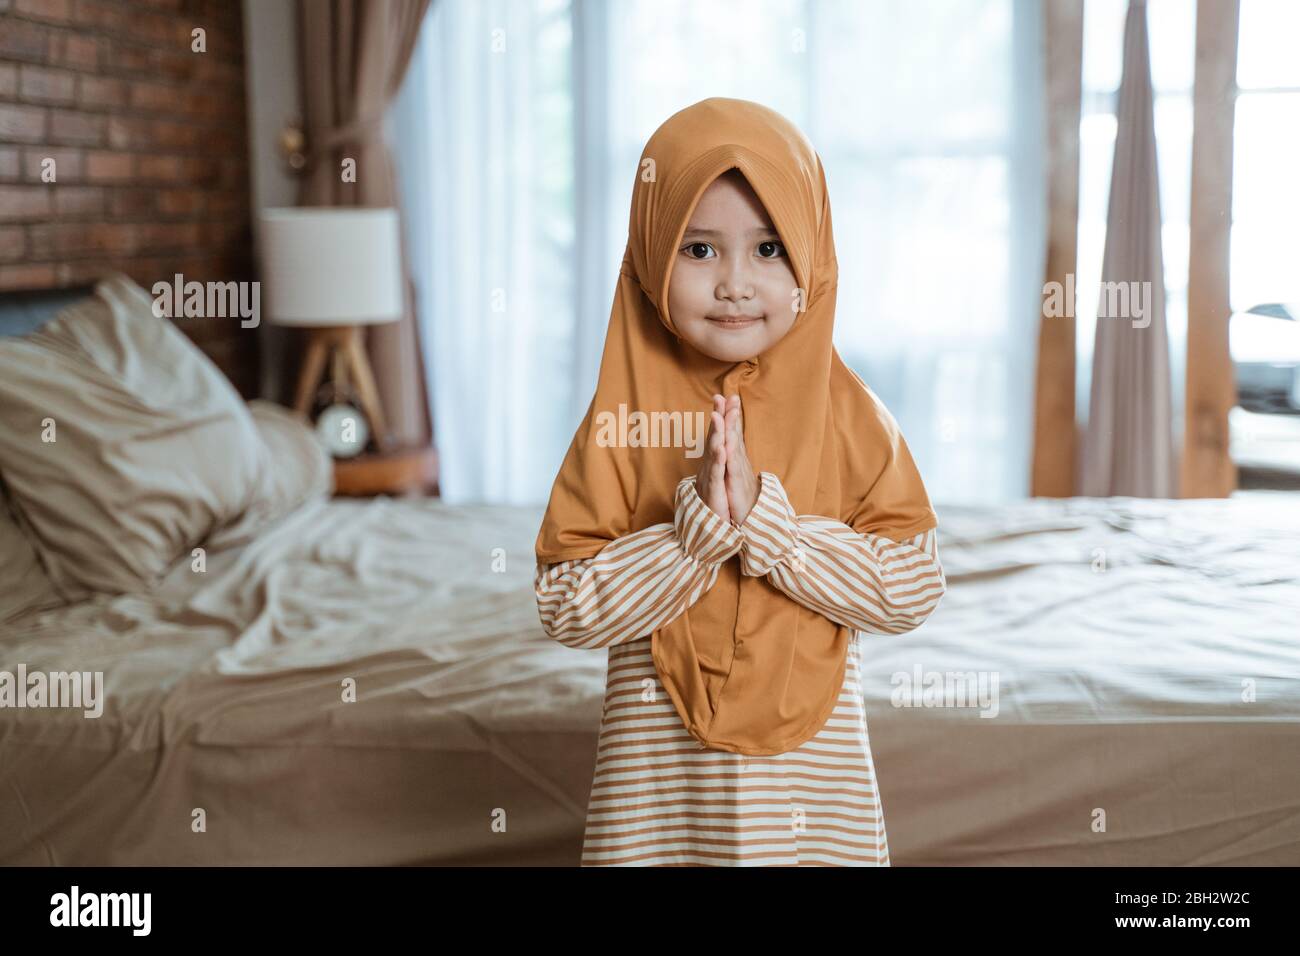 cute muslim girl greeting gesture welcoming ramadan Stock Photo